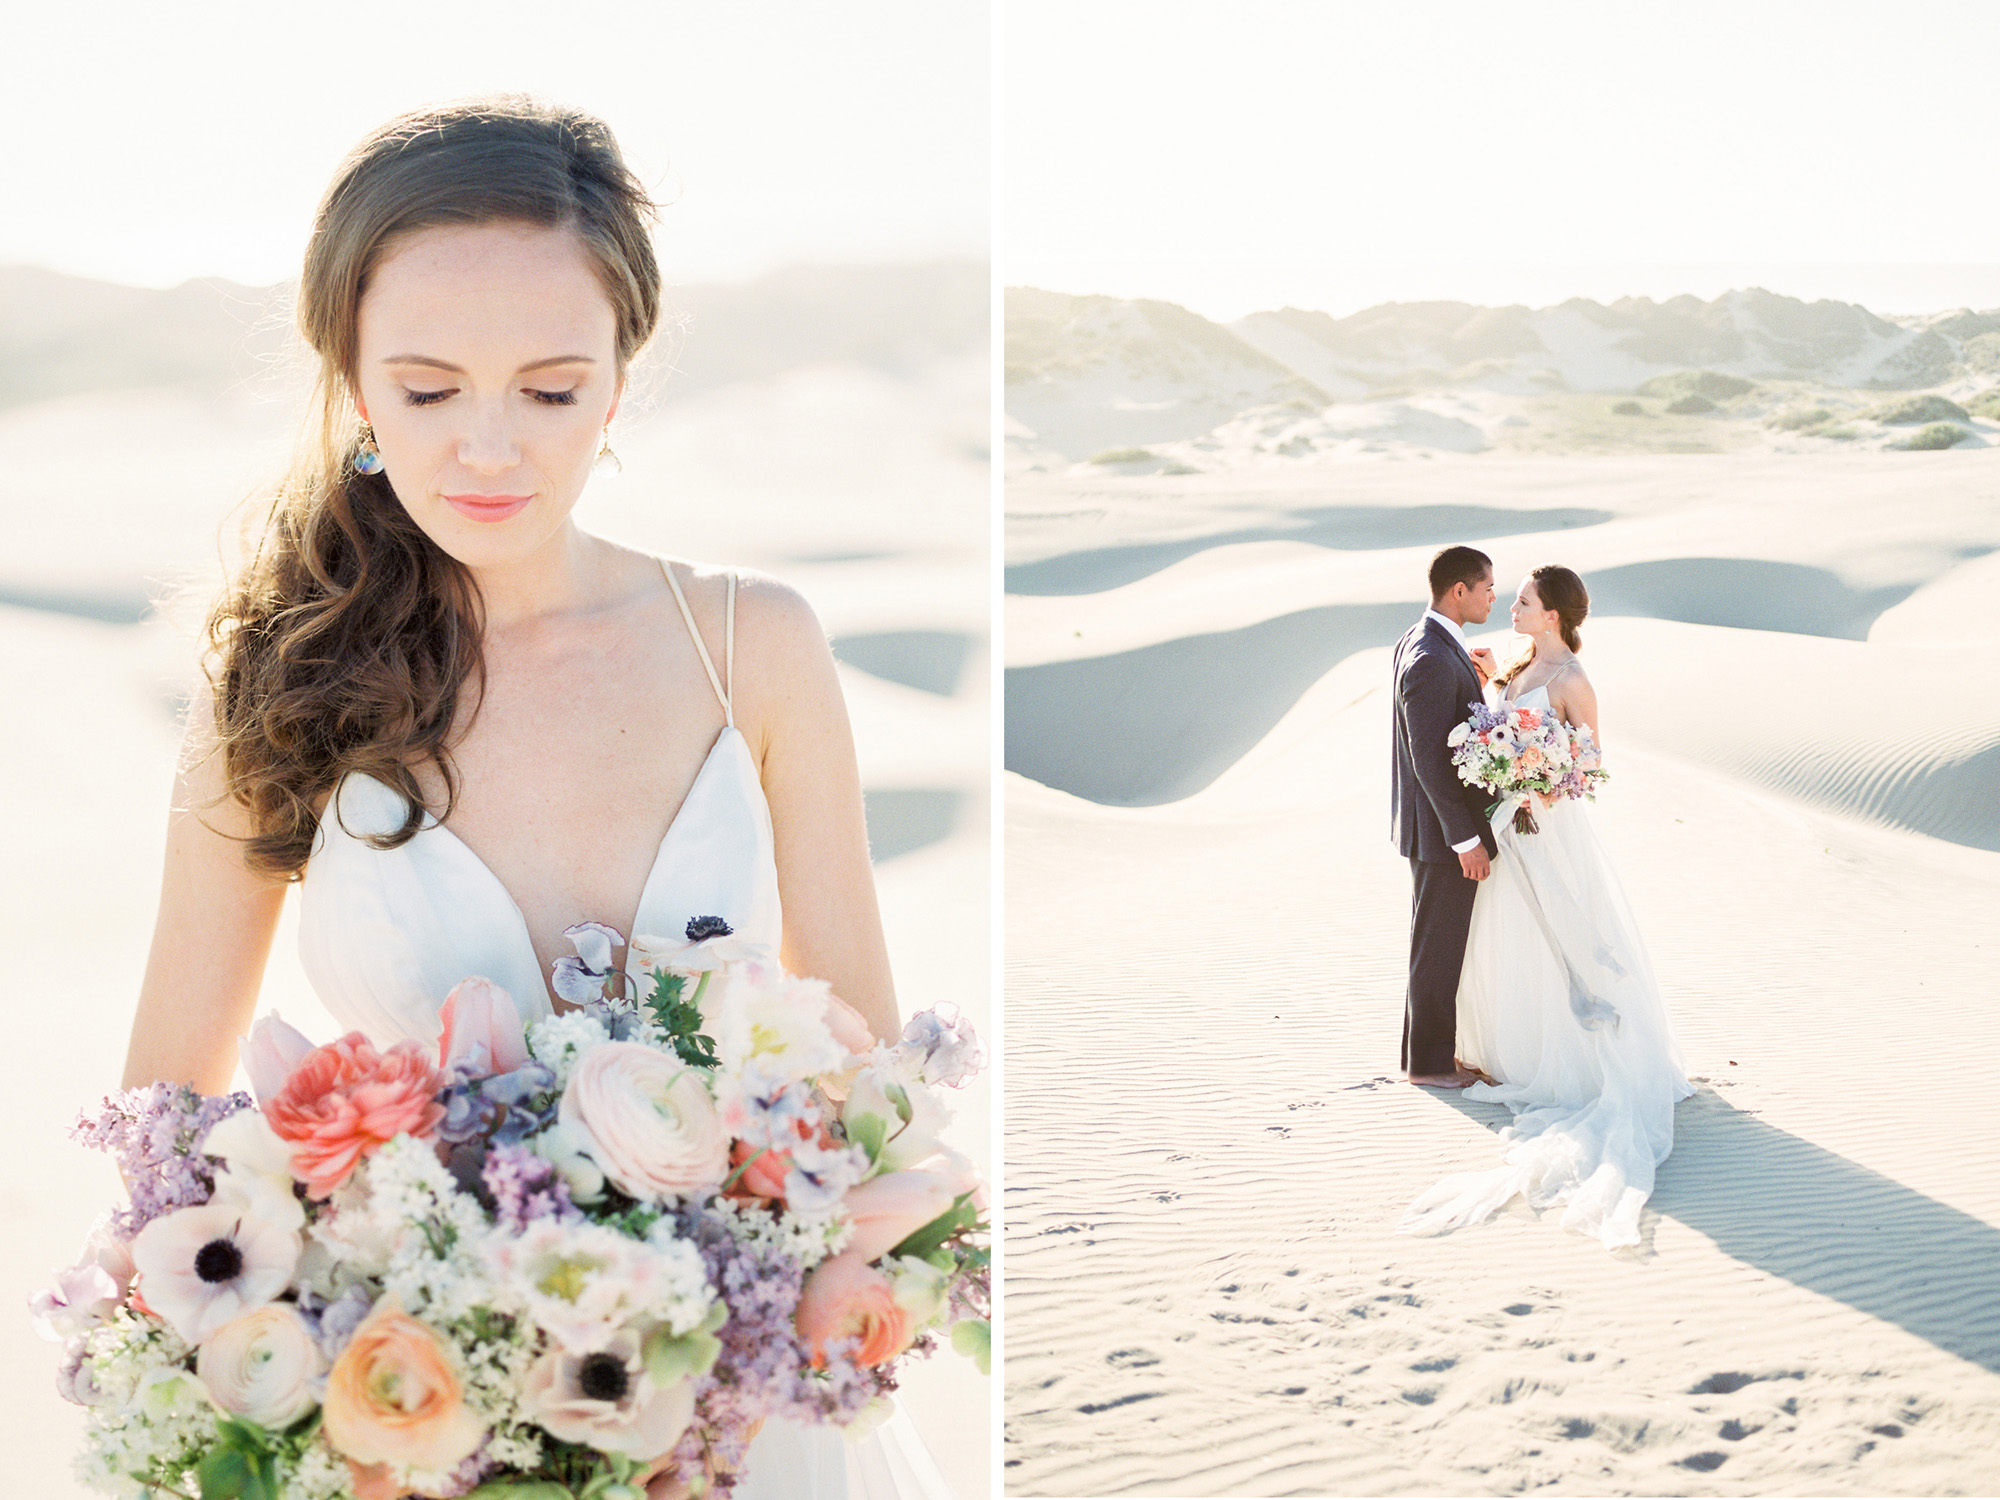 Fine art film photographer Tenth & Grace captures this Santa Barbara elopement on the sand dunes.